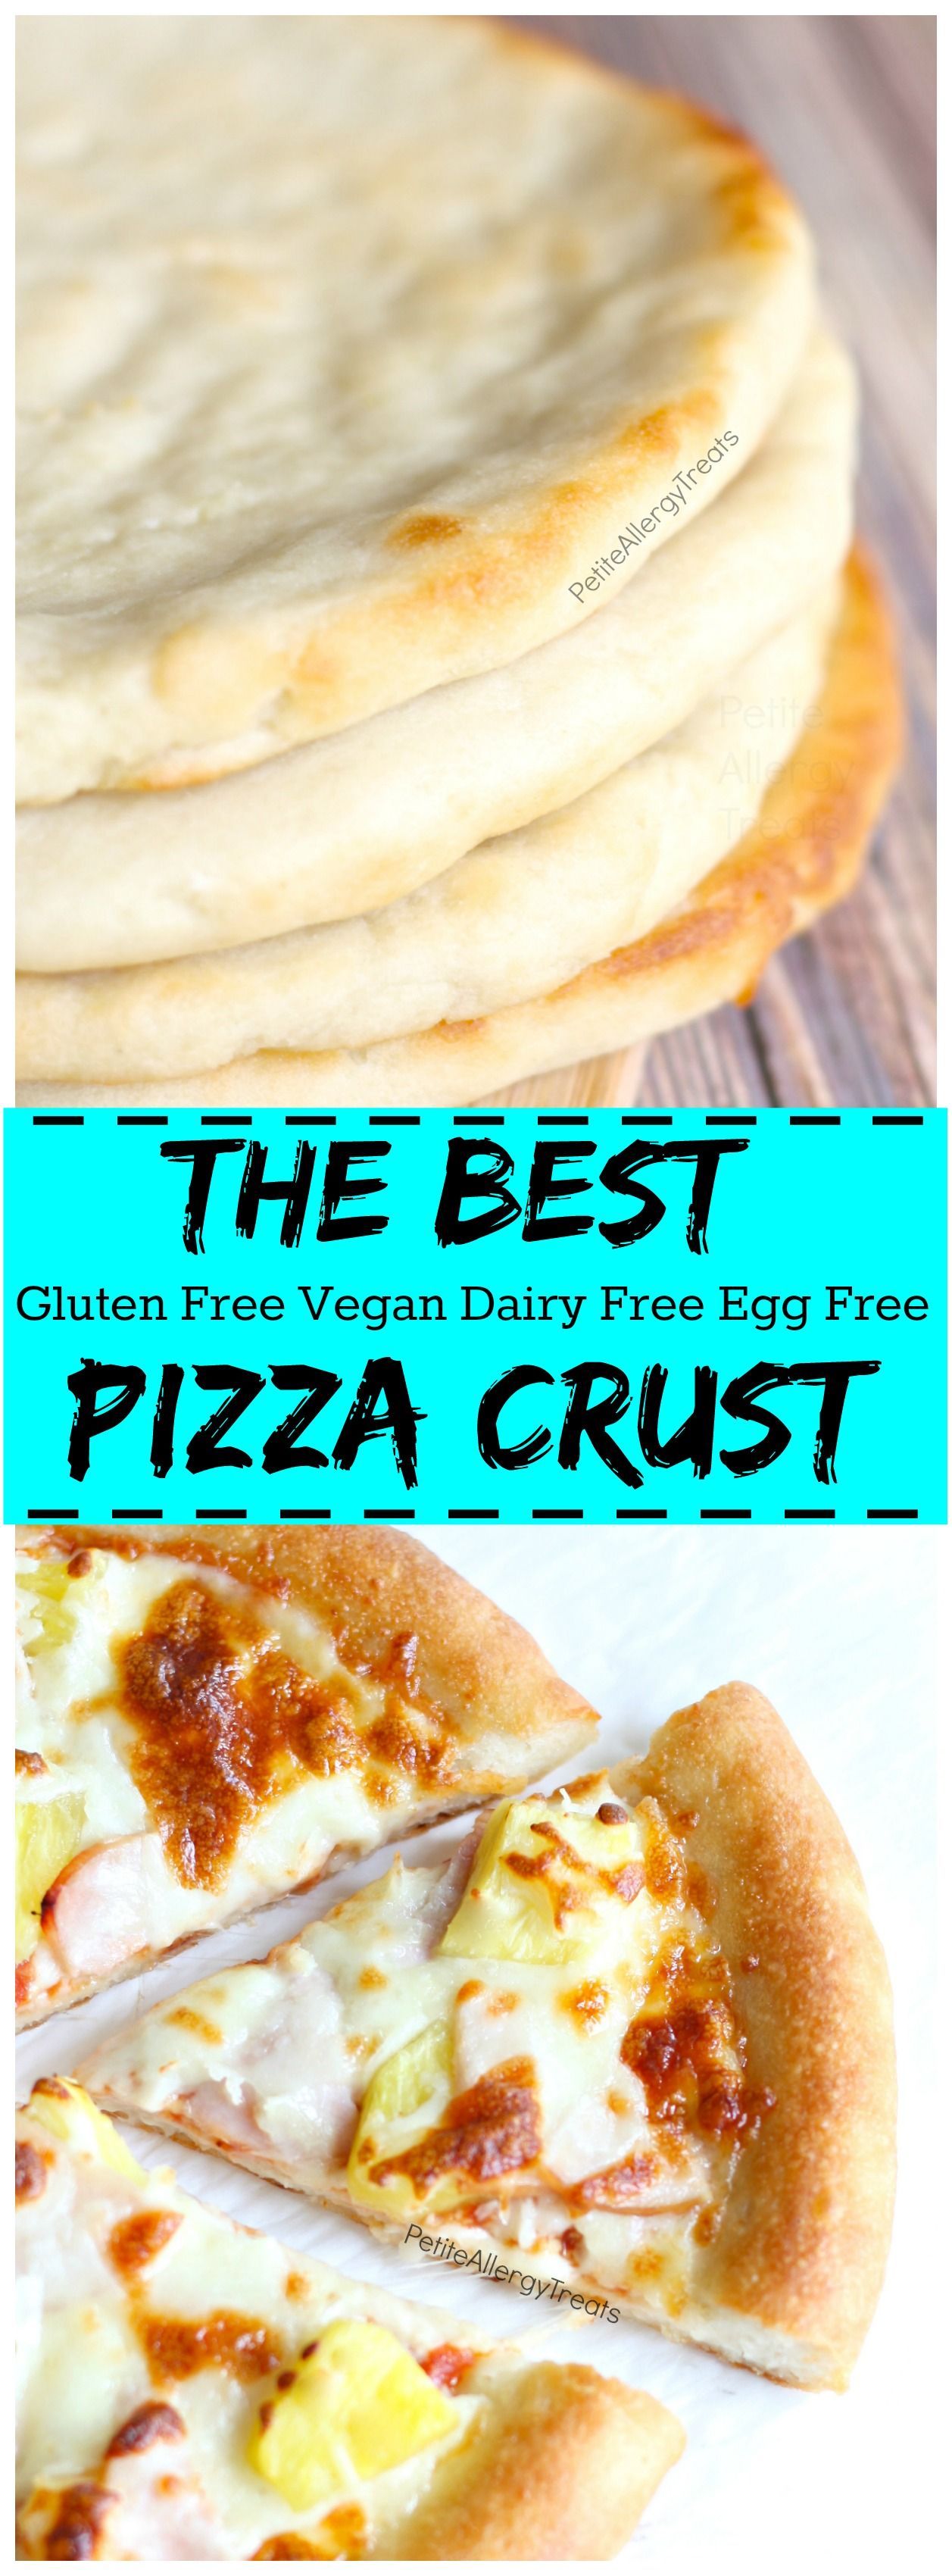 BEST gluten free vegan pizza crust recipe (egg free dairy)- chewy, crisp, soft- am